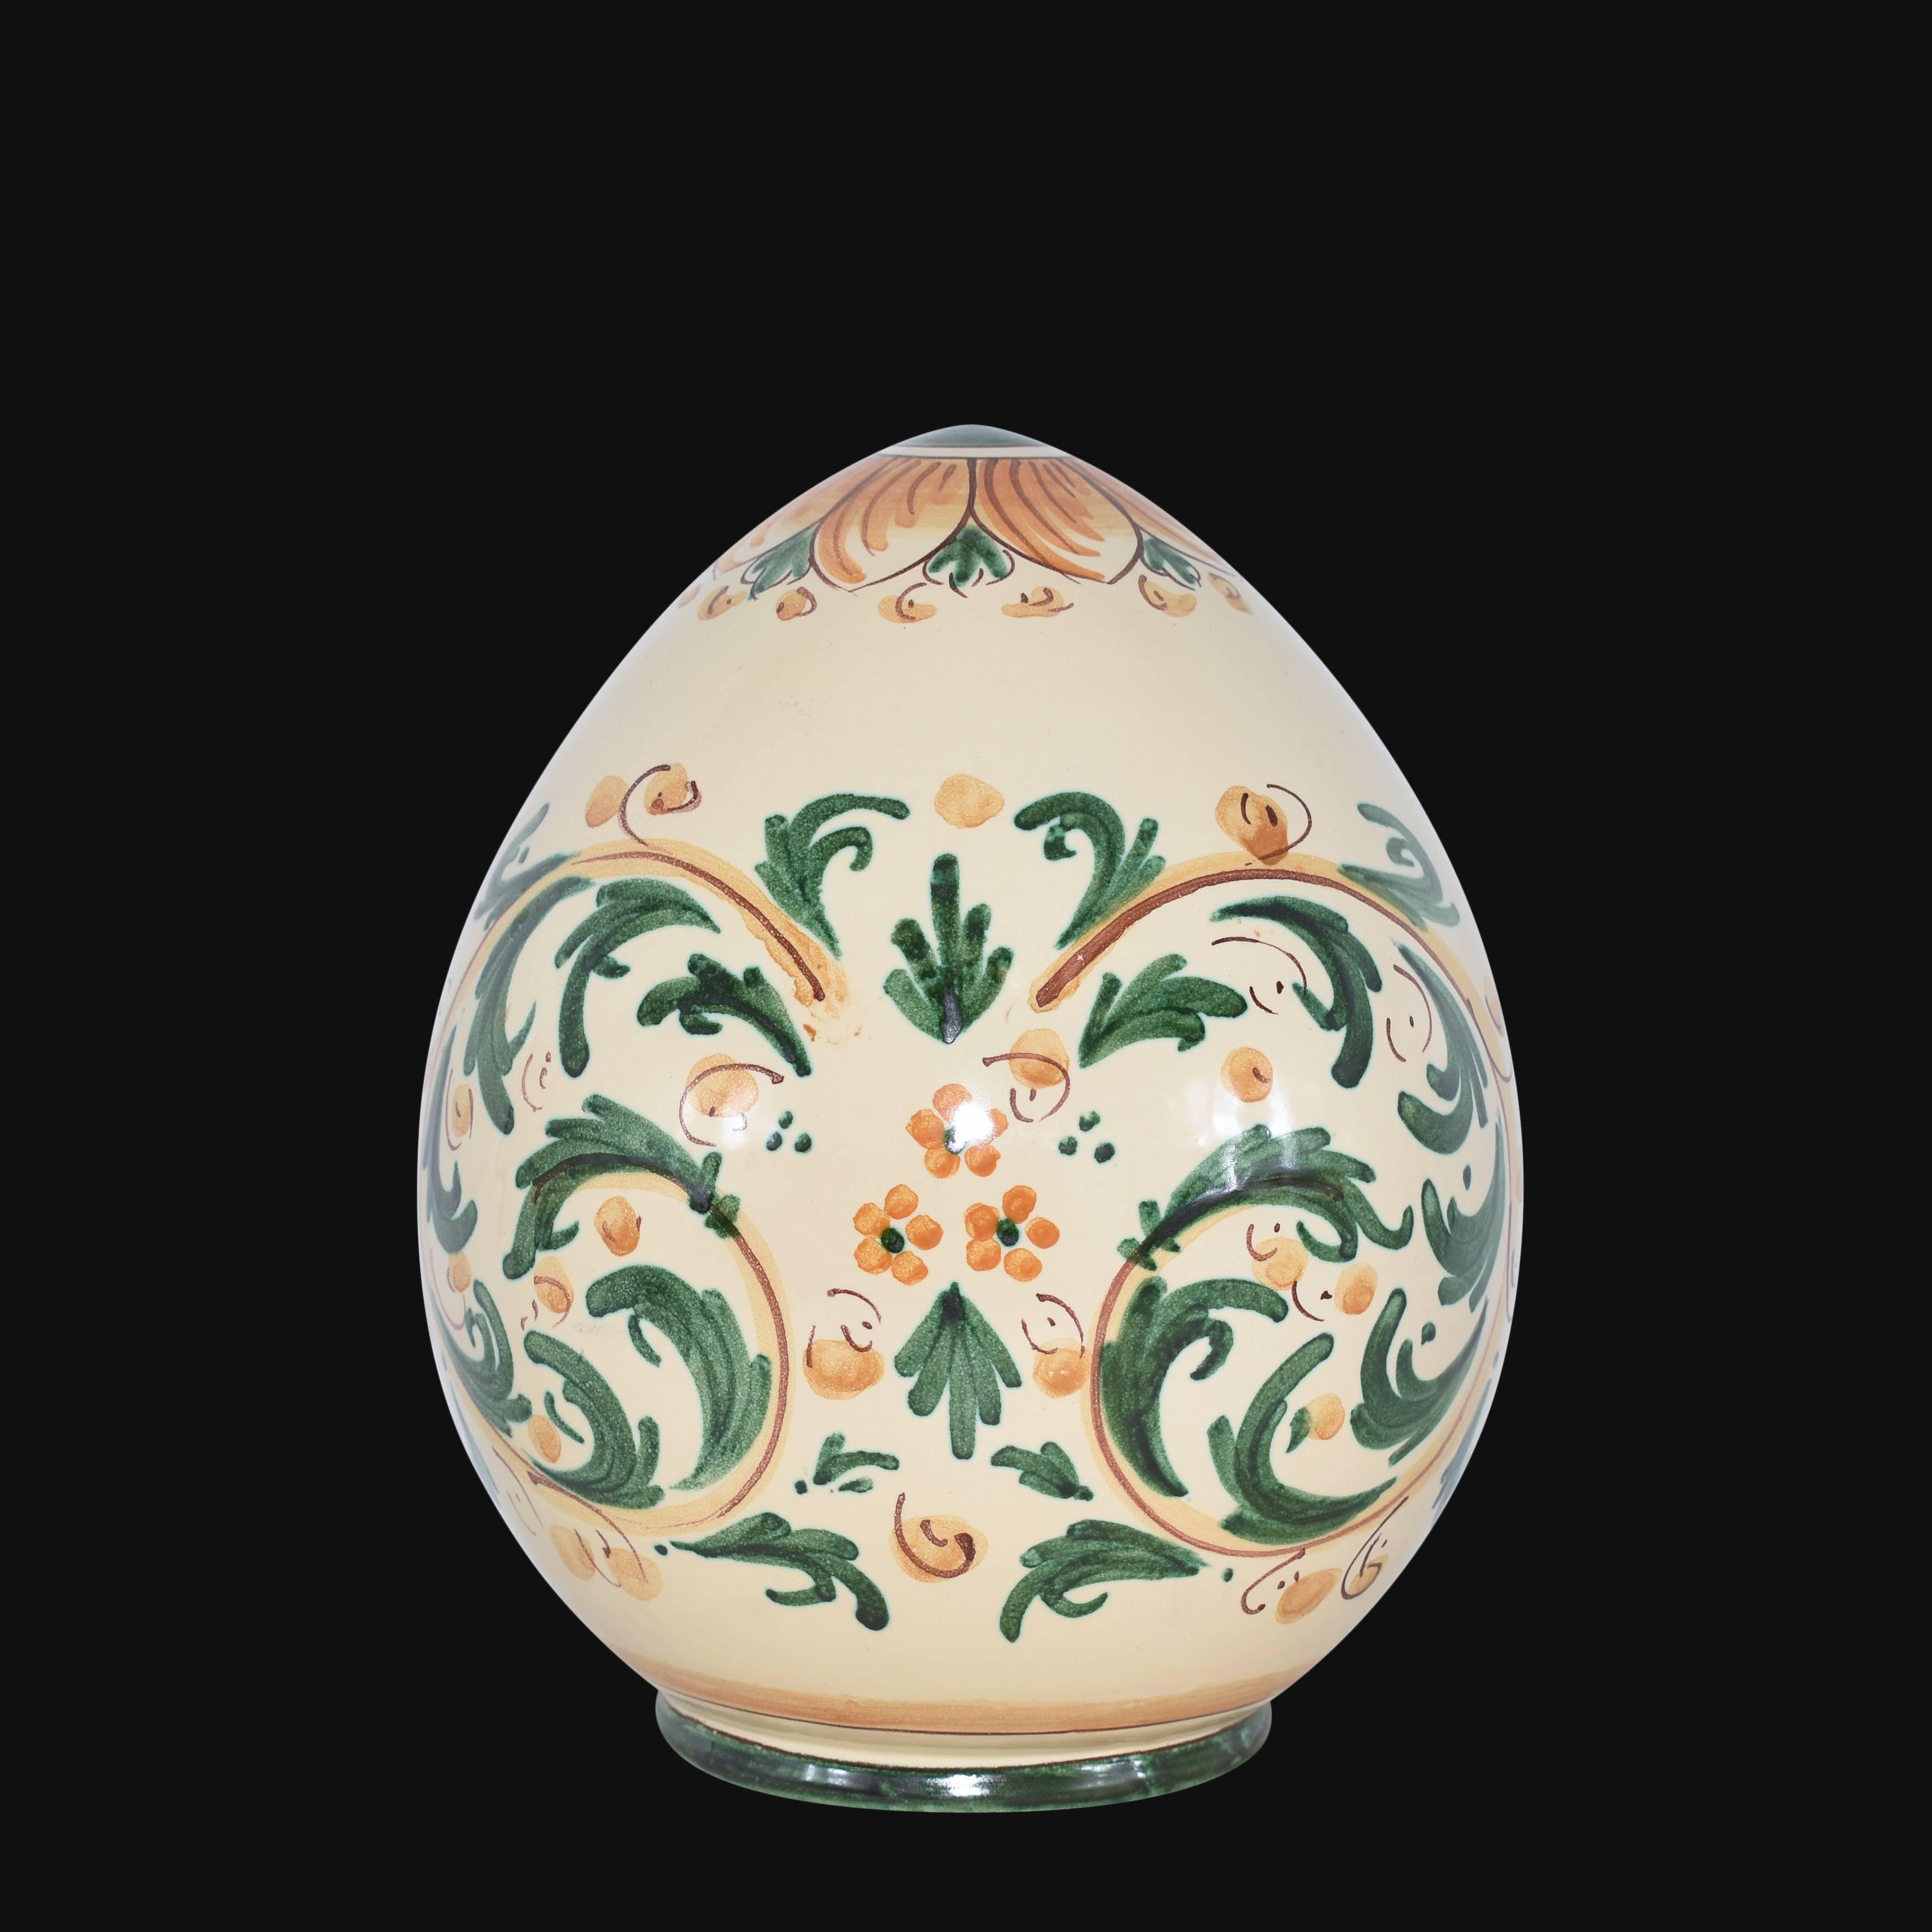 Uovo in ceramica h 15/20 cm Serie d'arte verde e arancio - Ceramiche di Caltagirone - Ceramiche di Caltagirone Sofia